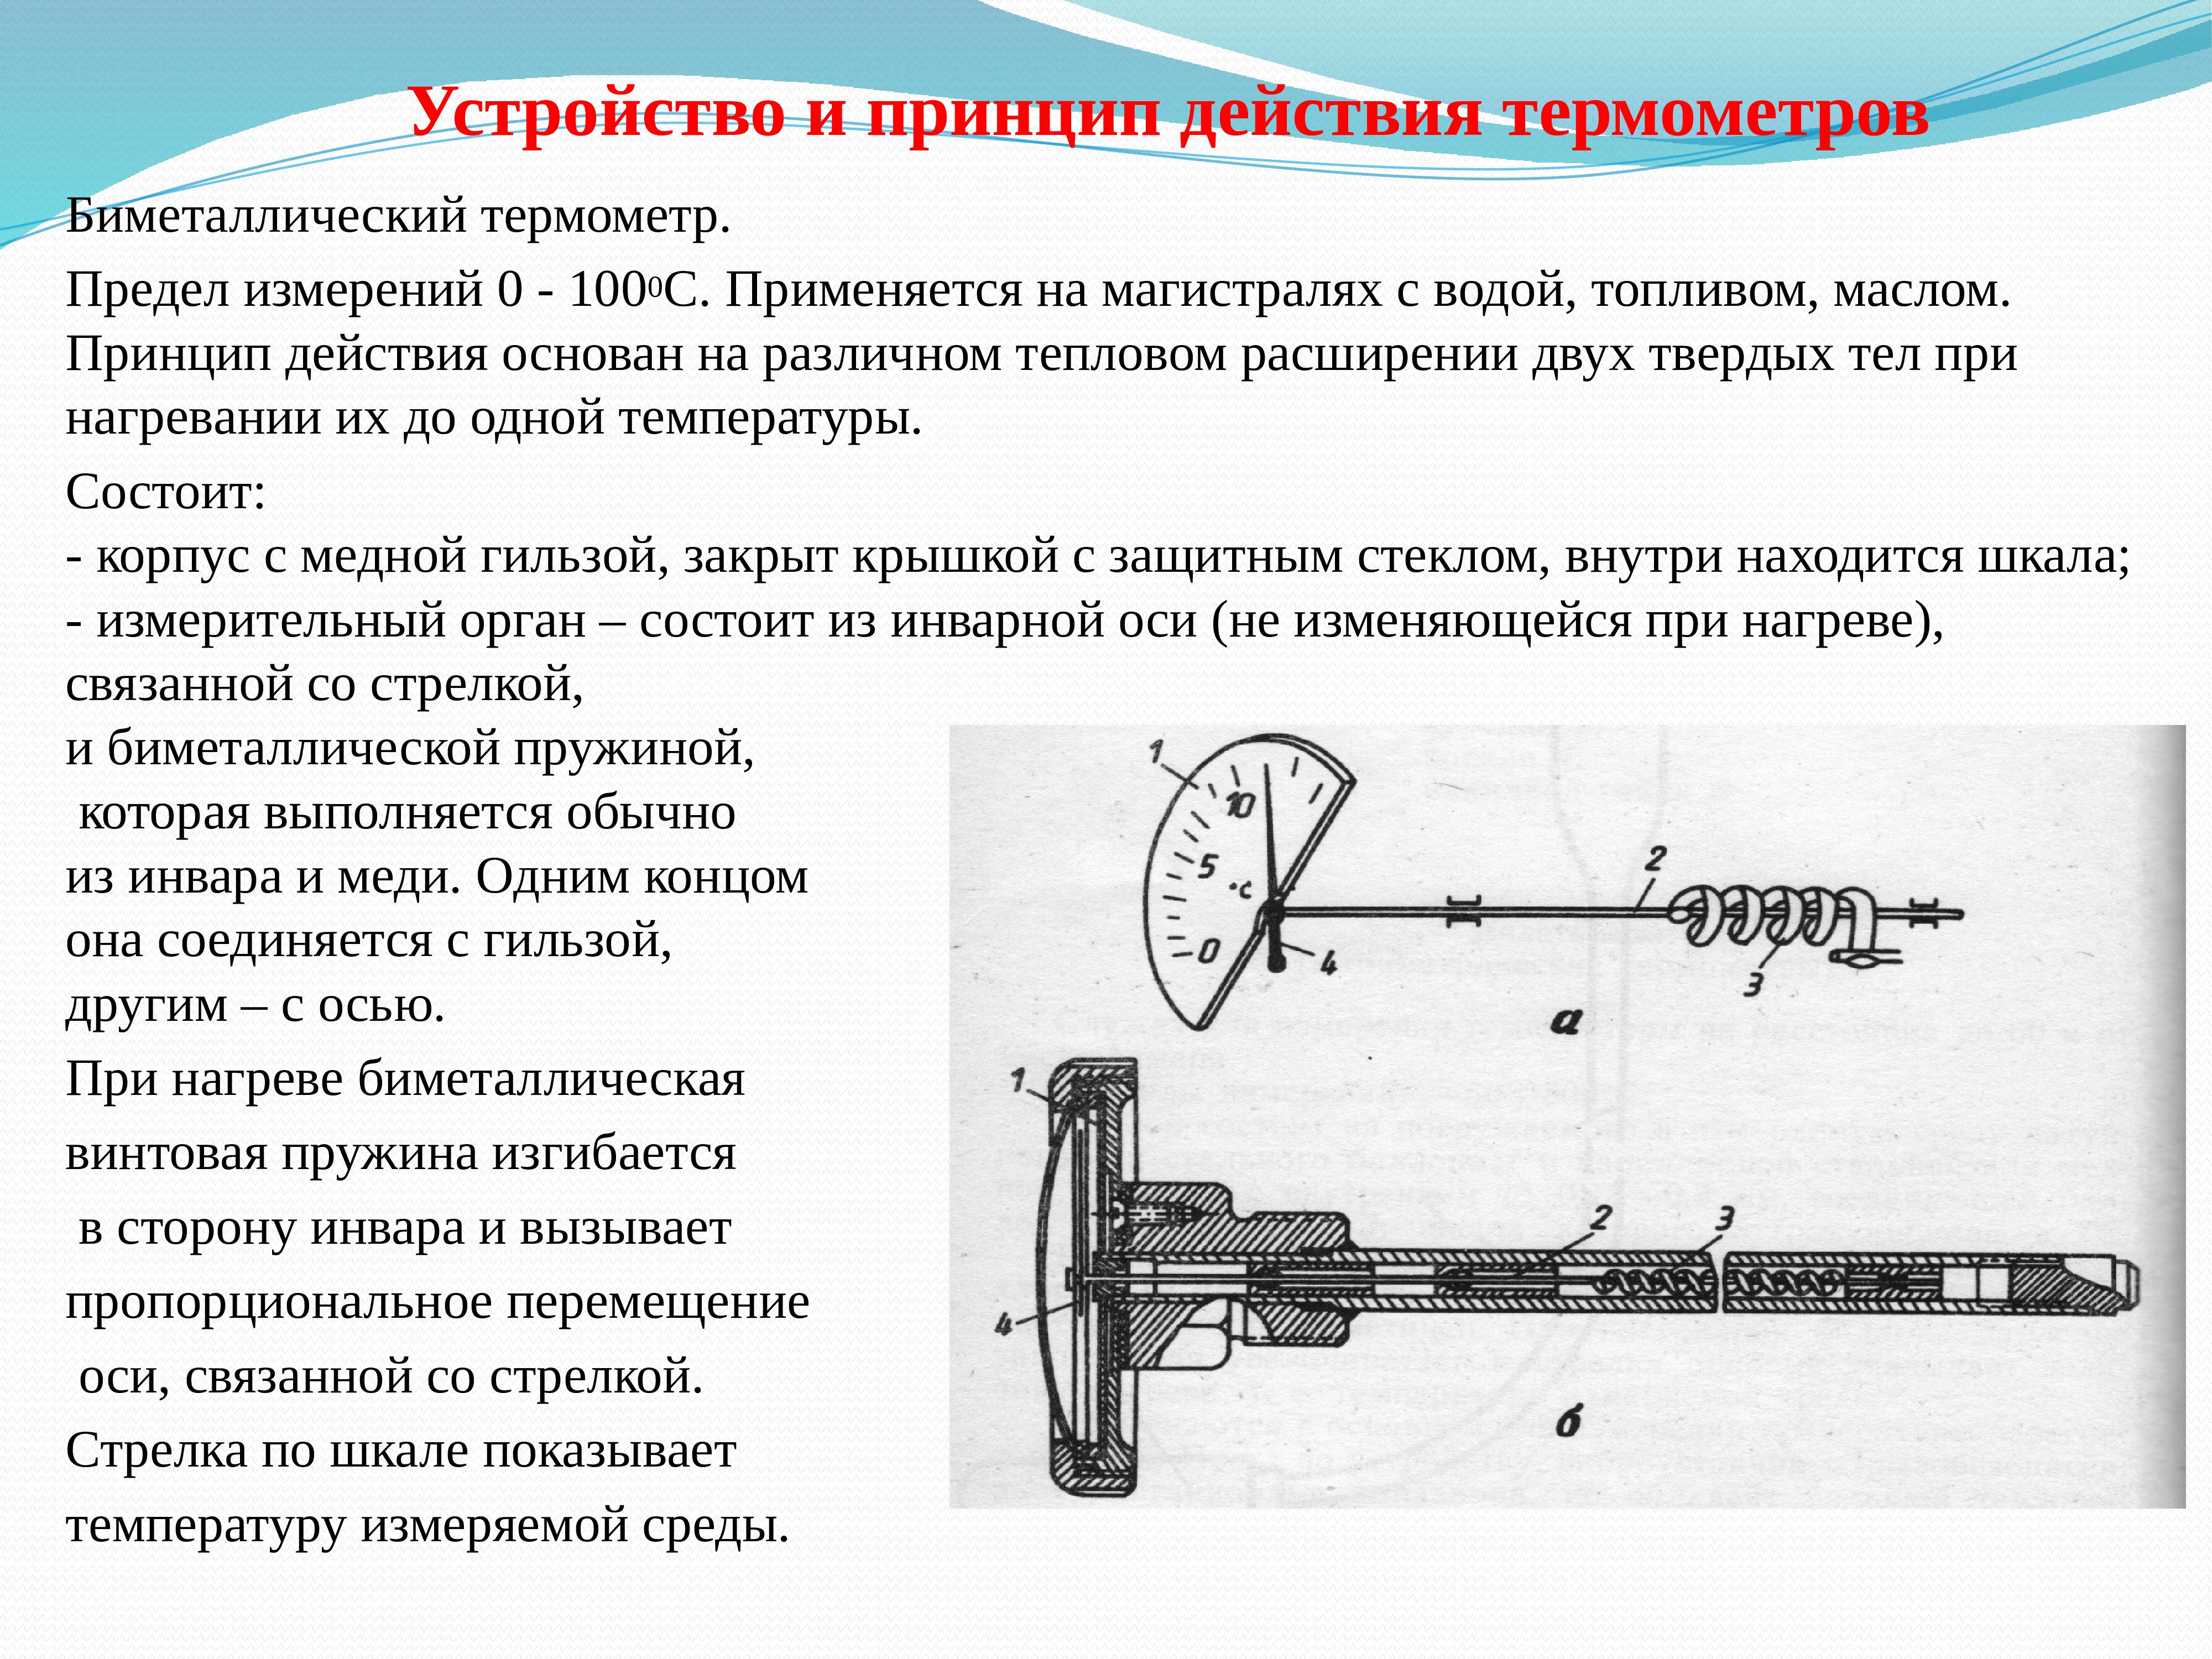 Биметаллический термометр принцип действия устройство.